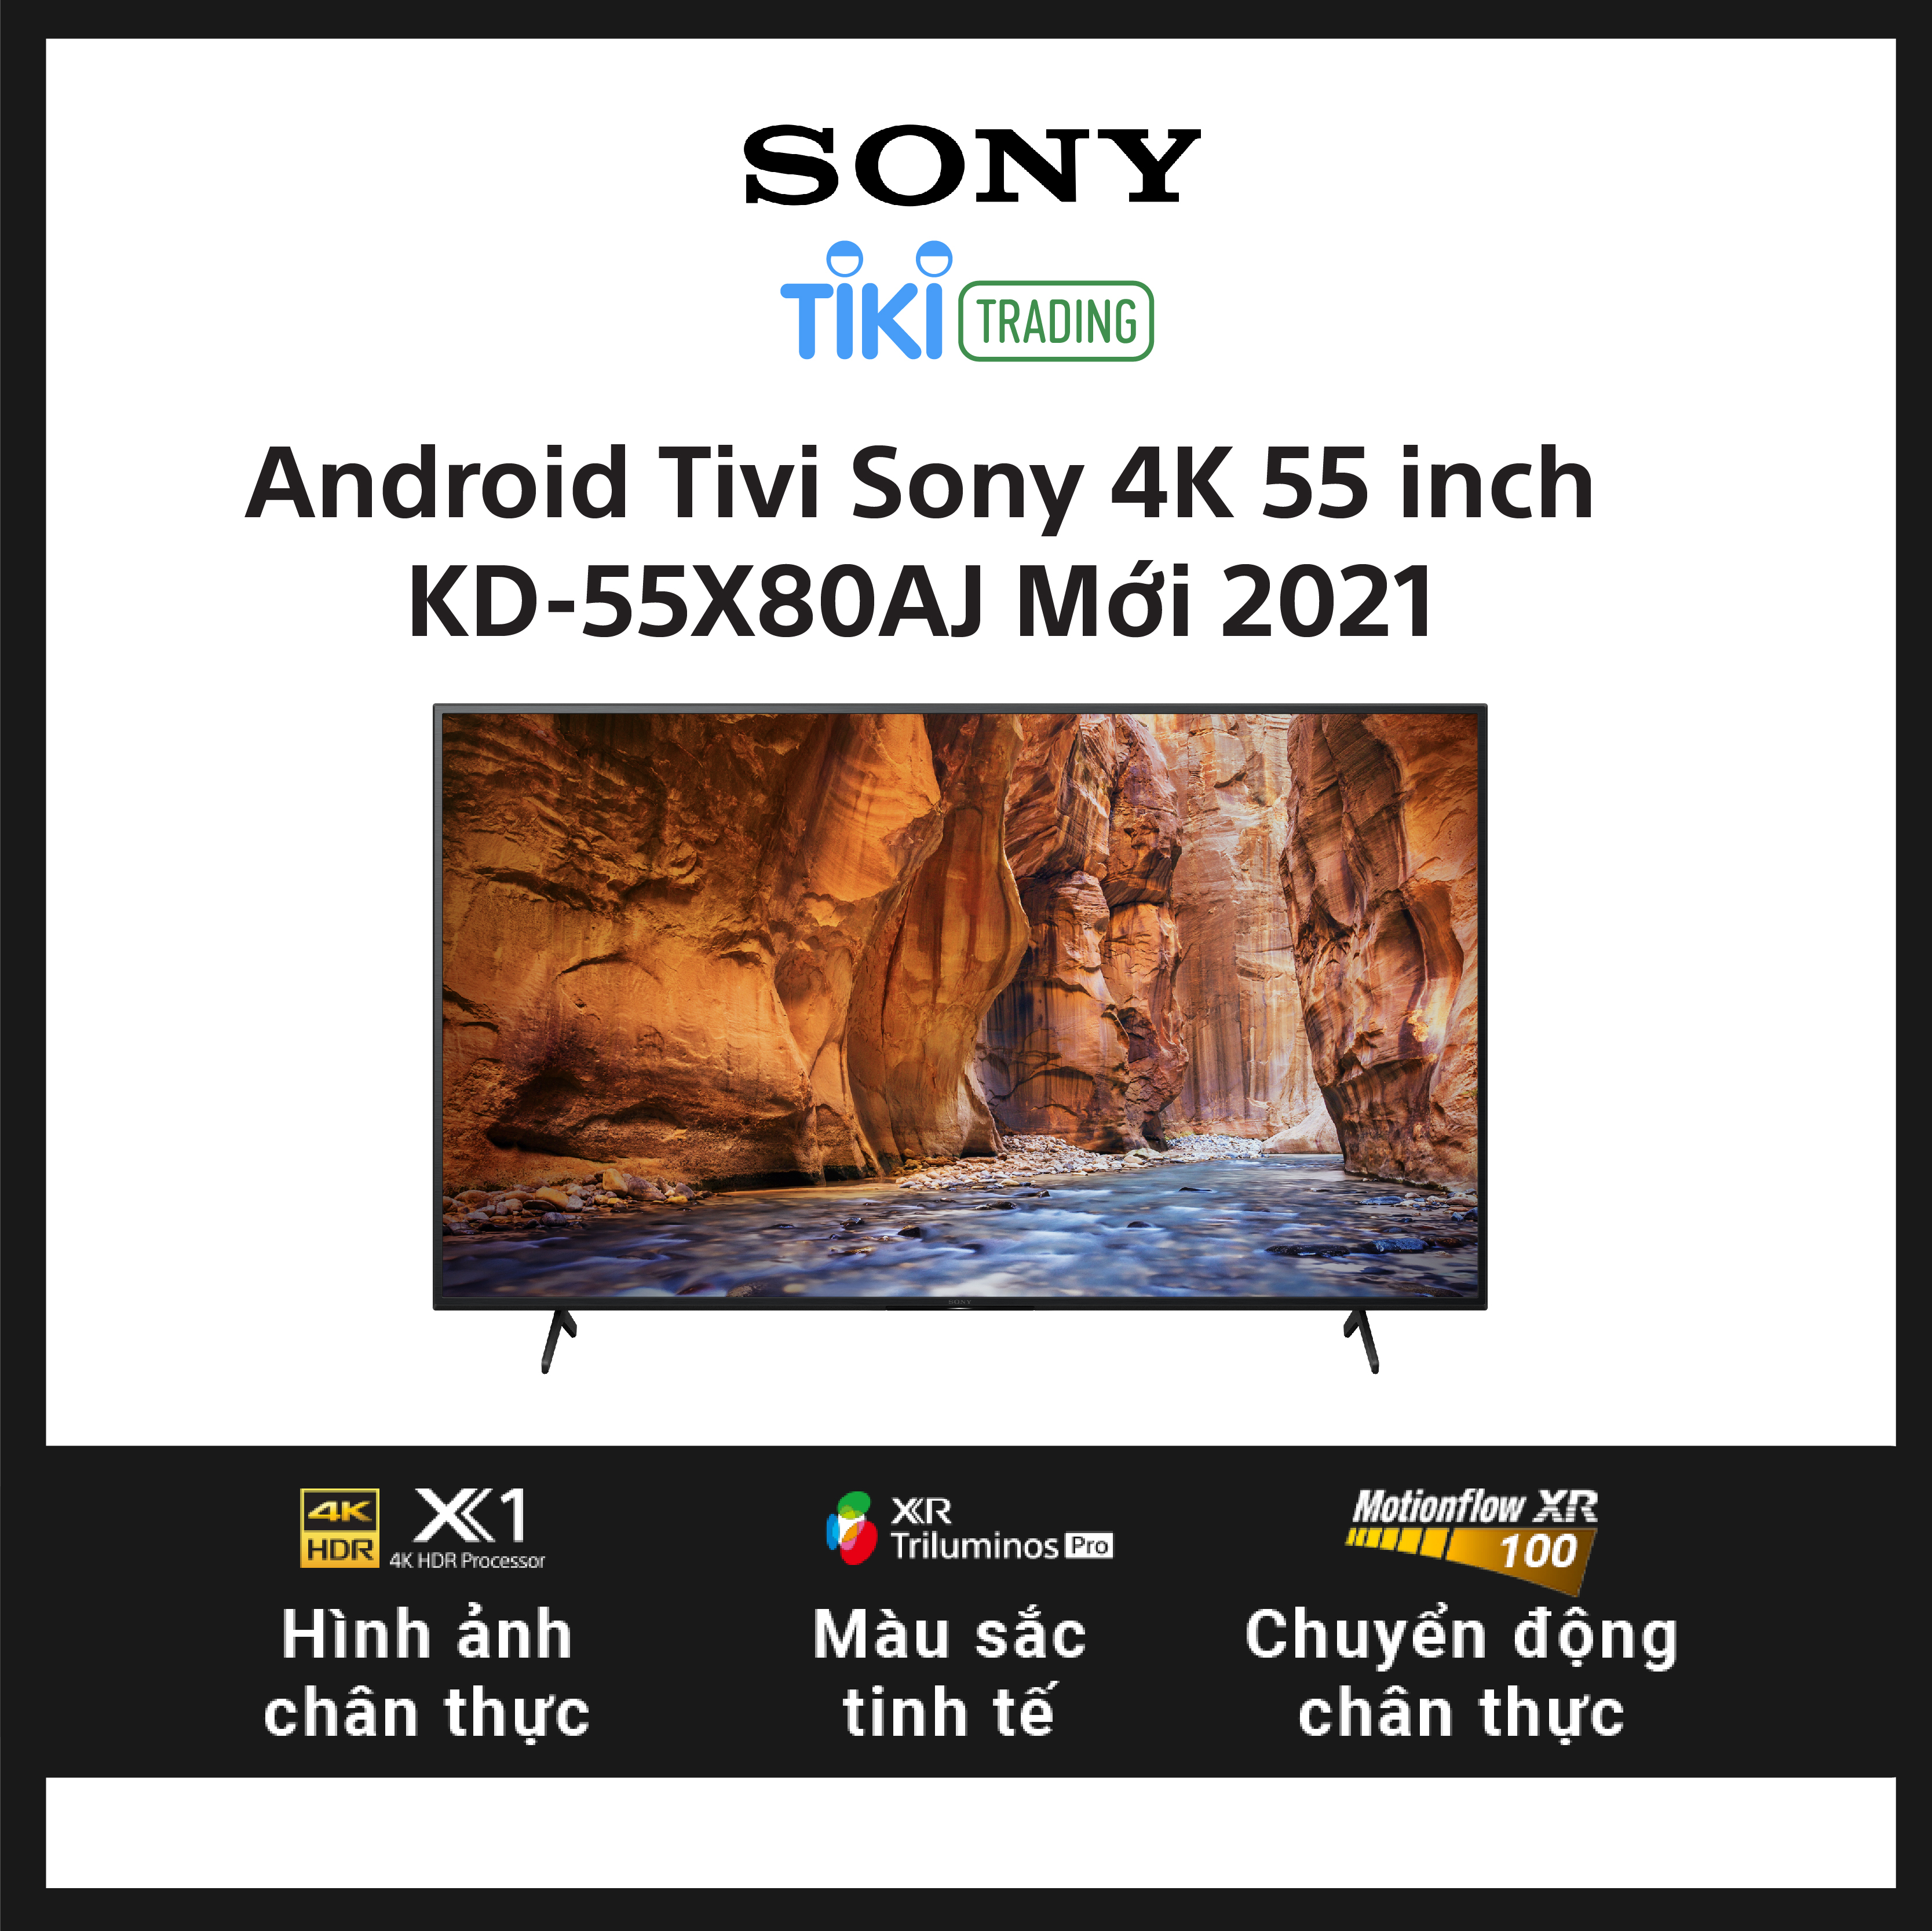 Android Tivi Sony 4K 55 inch KD-55X80AJ